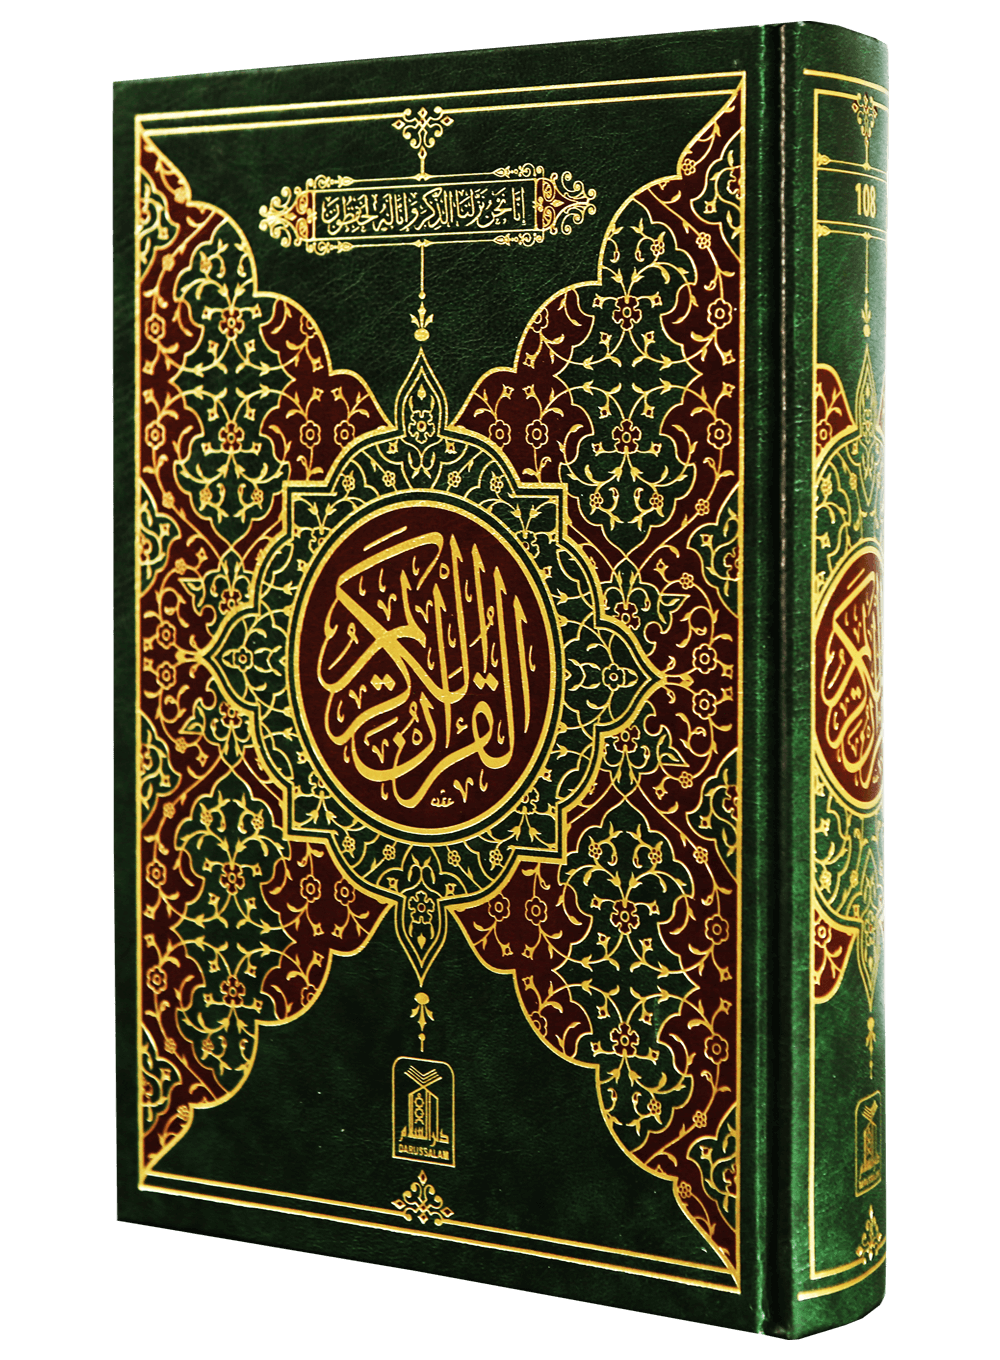 Quroni karim kitobi. Коран Халифа Османа. Коран иллюстрации. Книга "Коран".